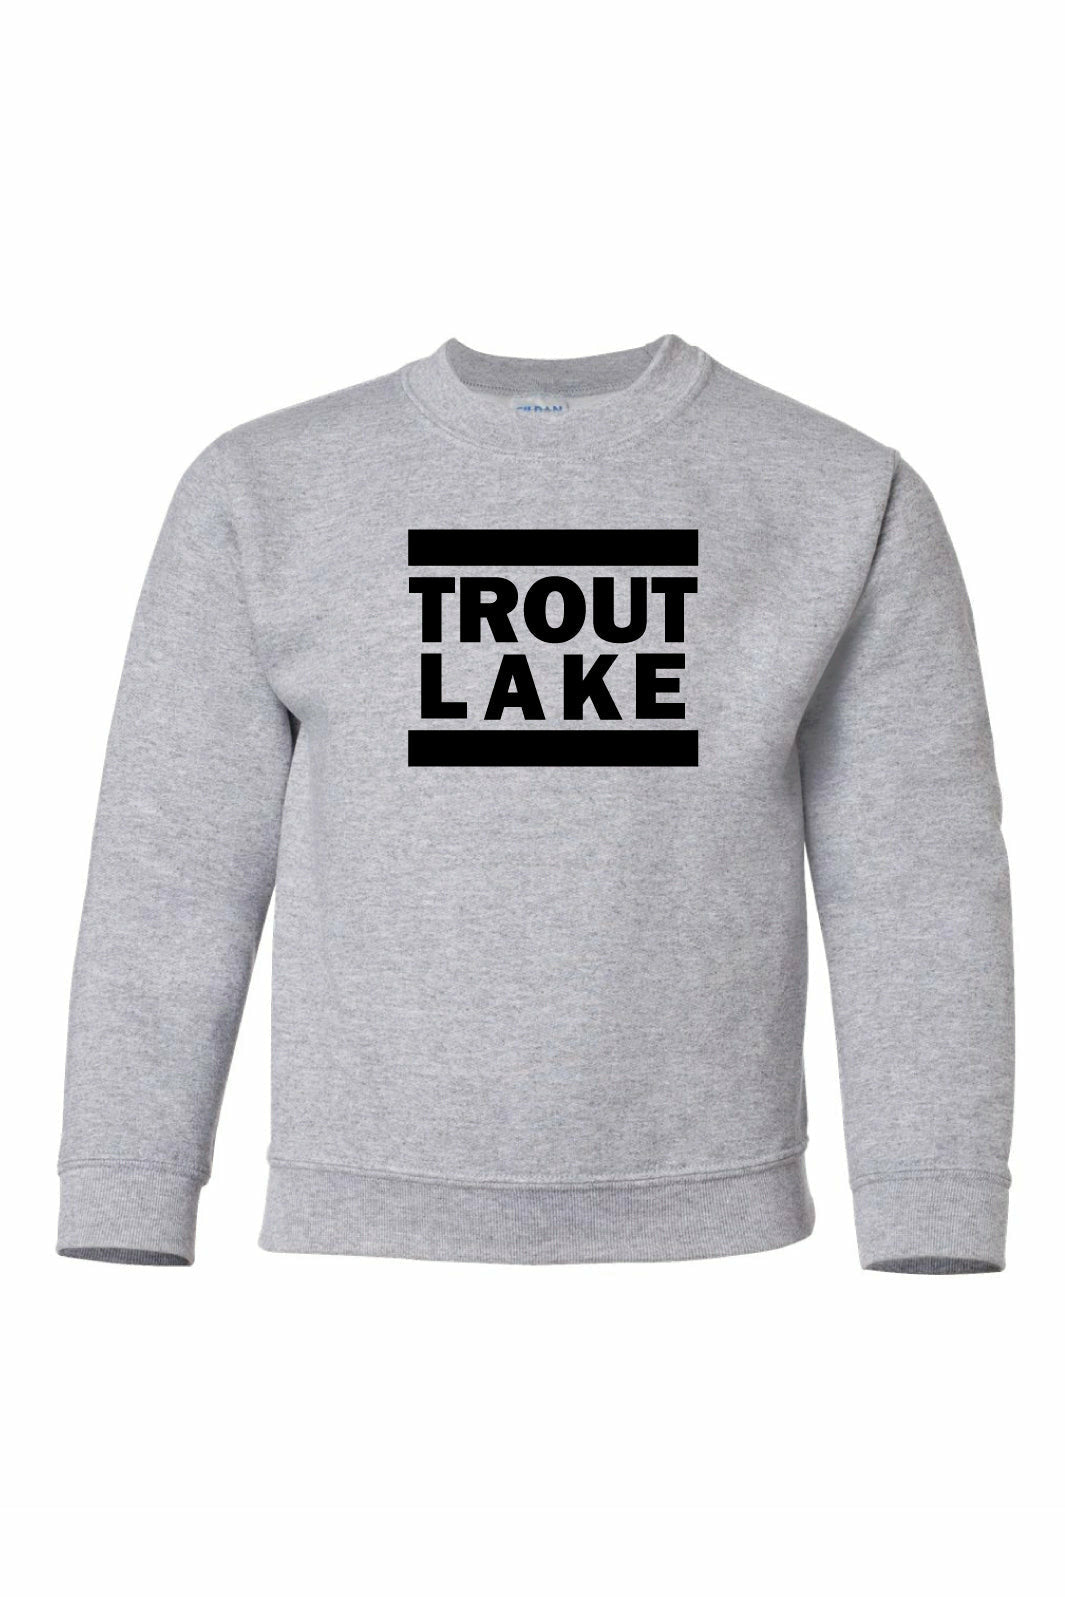 Trout Lake | Crewneck Sweatshirt (Youth) - Oddball Workshop